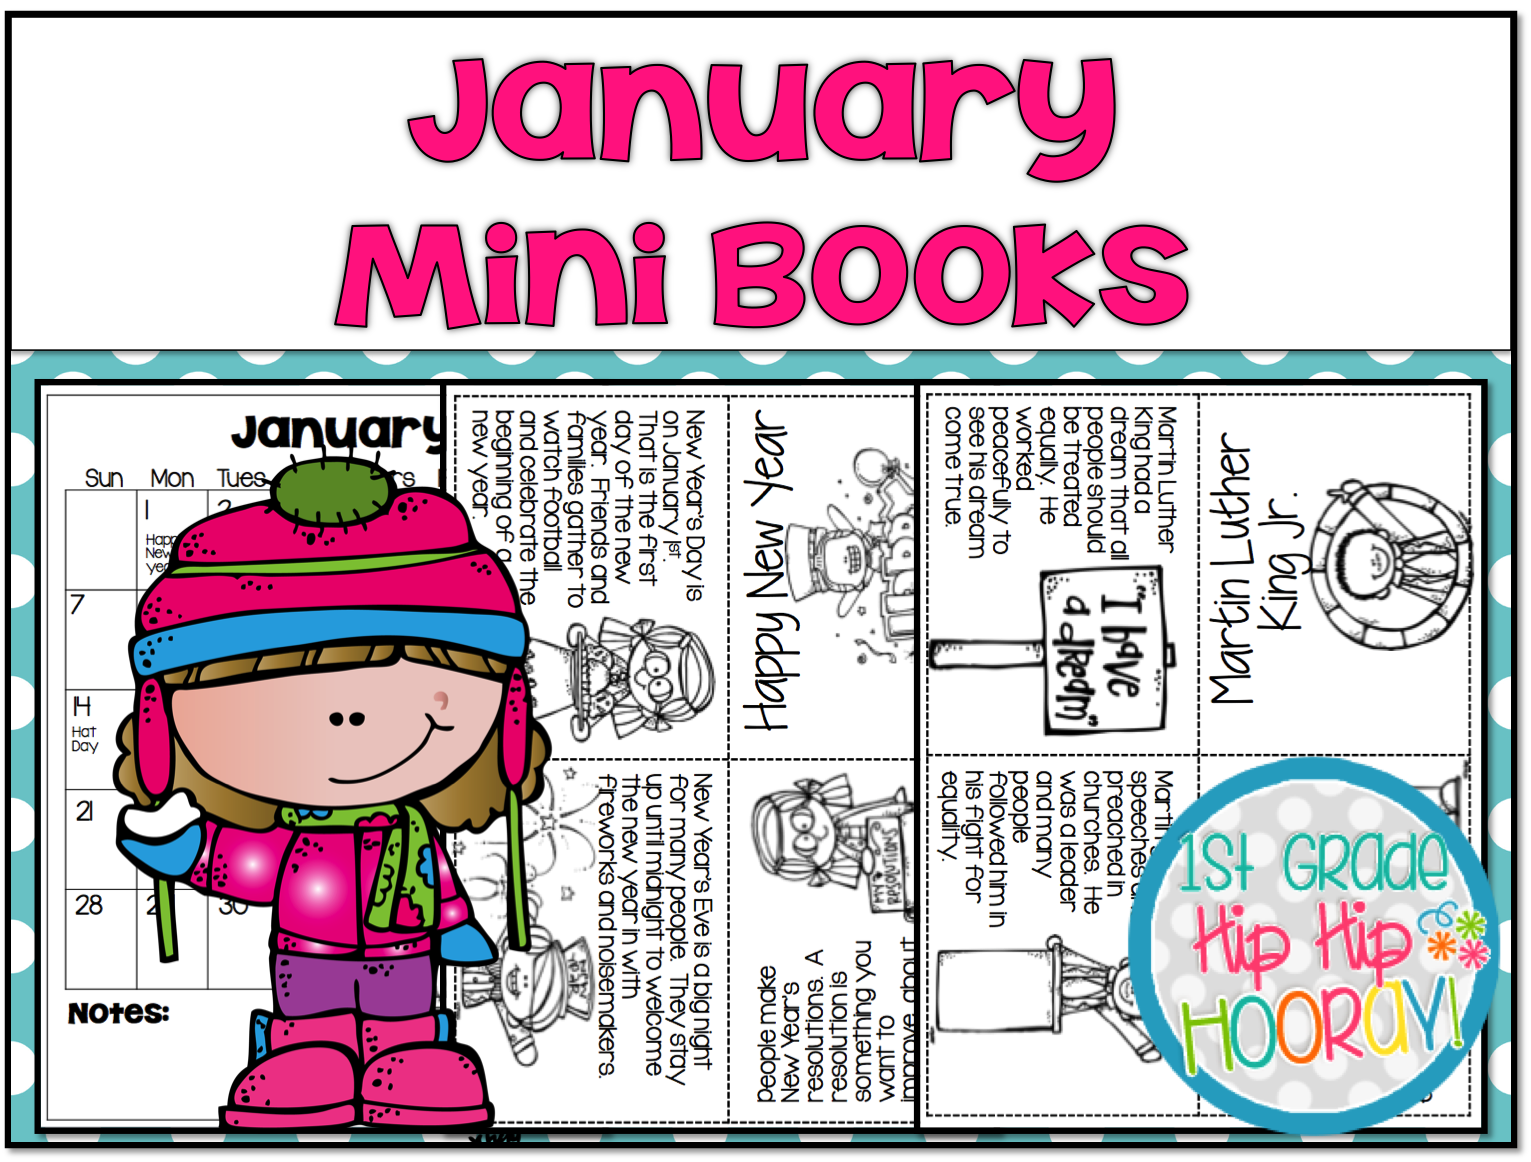 1st Grade Hip Hip Hooray January Mini Books Print Fold Read 